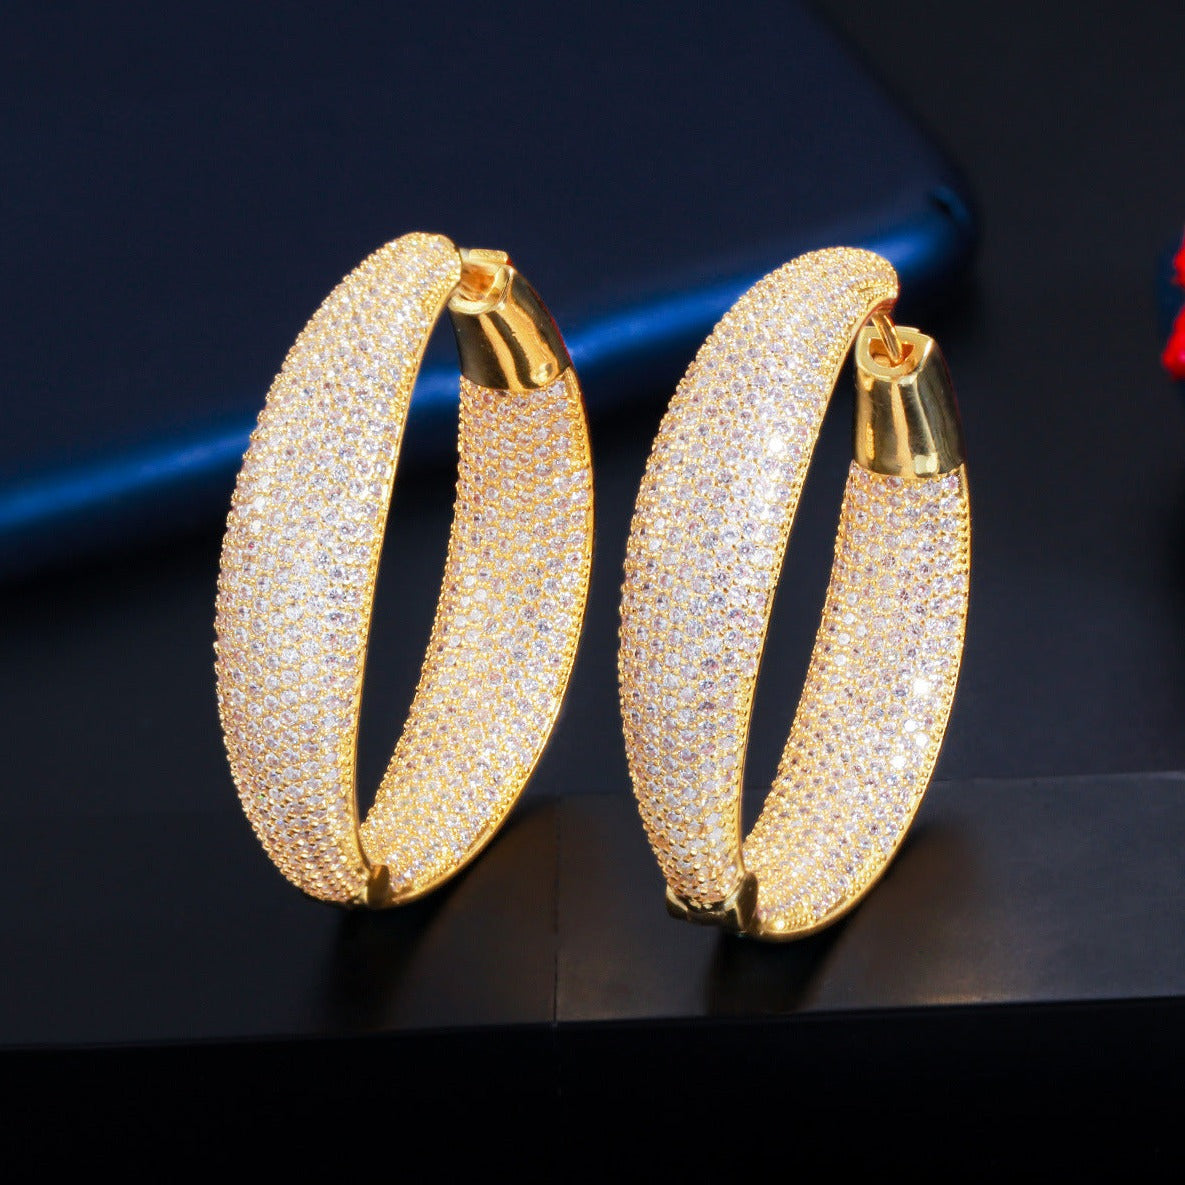 MiniLux "Como" golden earrings